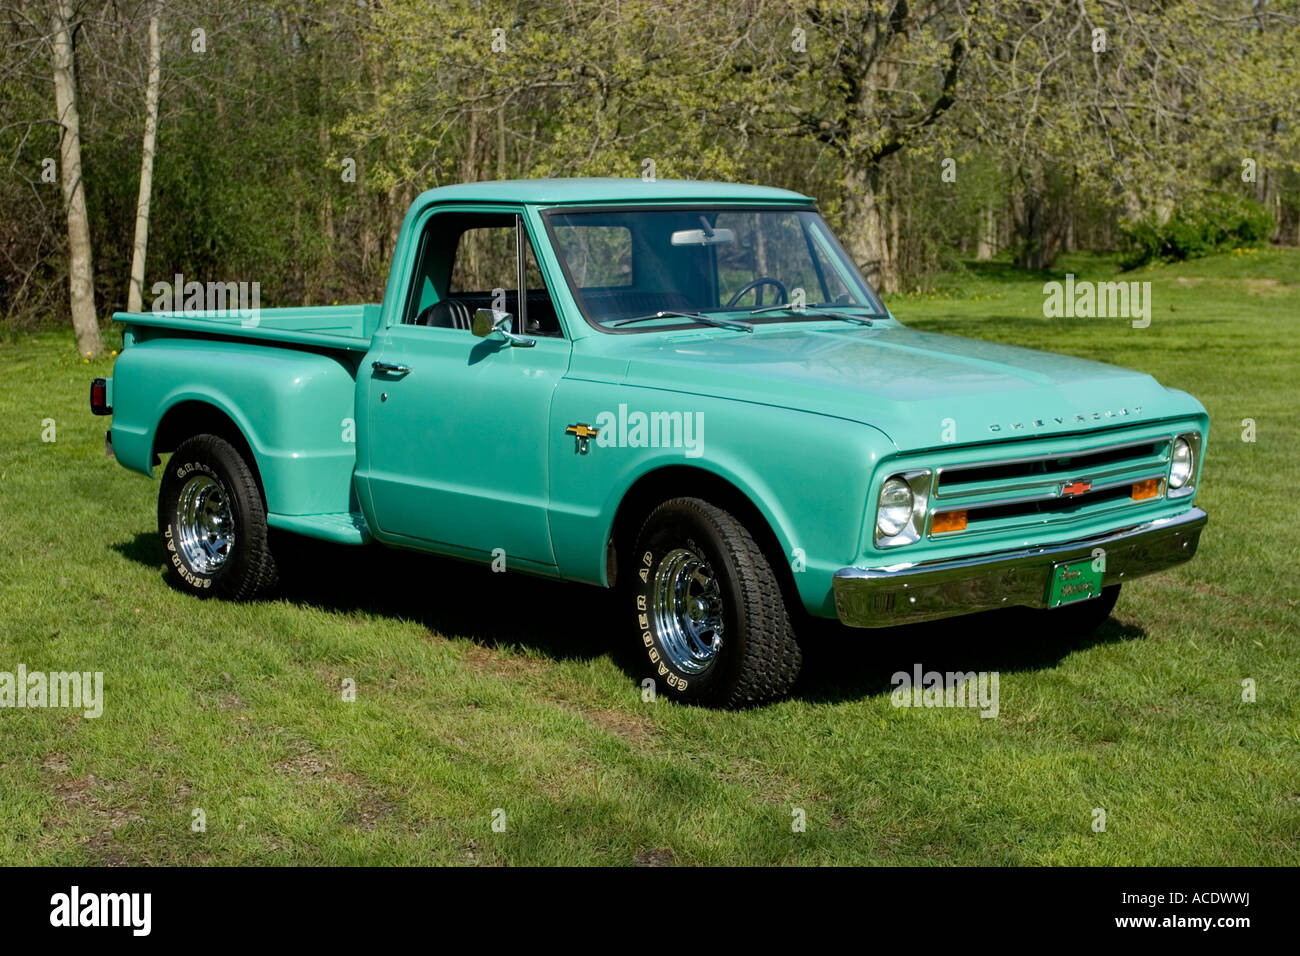 1967 1/2 Ton Chevrolet Pick Up truck Stock Photo